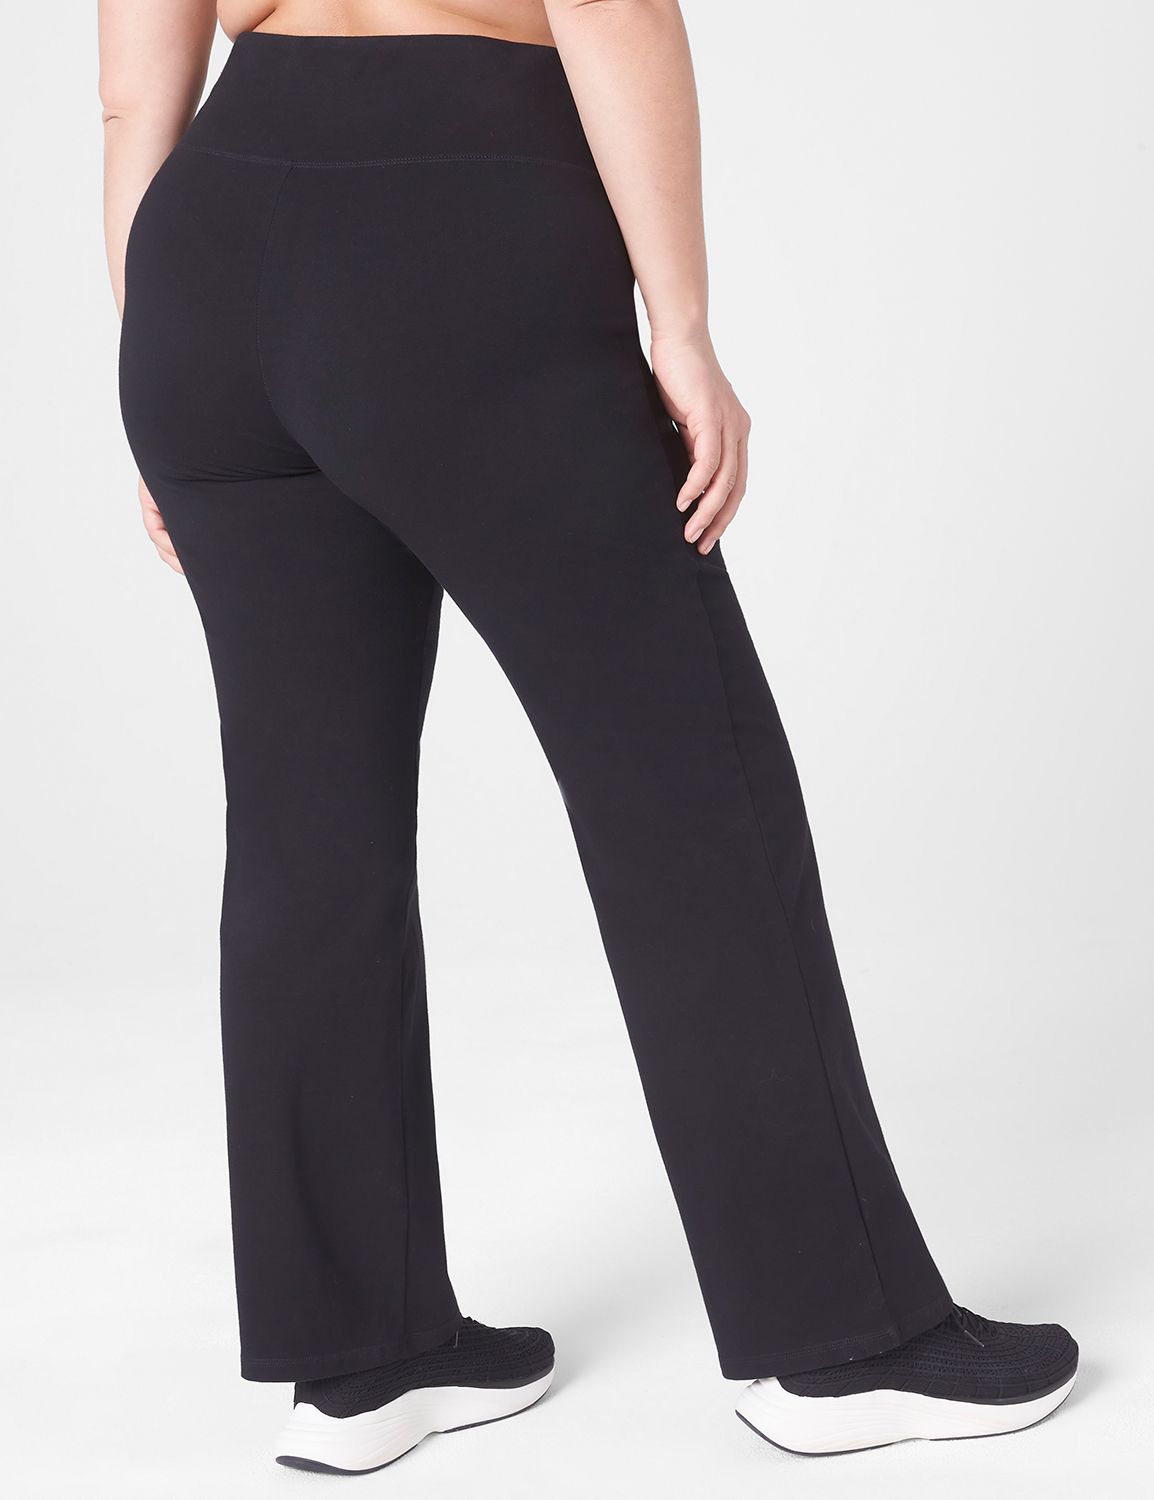  2 Back Pockets,Petite Womens Straight Leg Yoga Pants Workout  Pants Slim Fit,27,Black,Size S